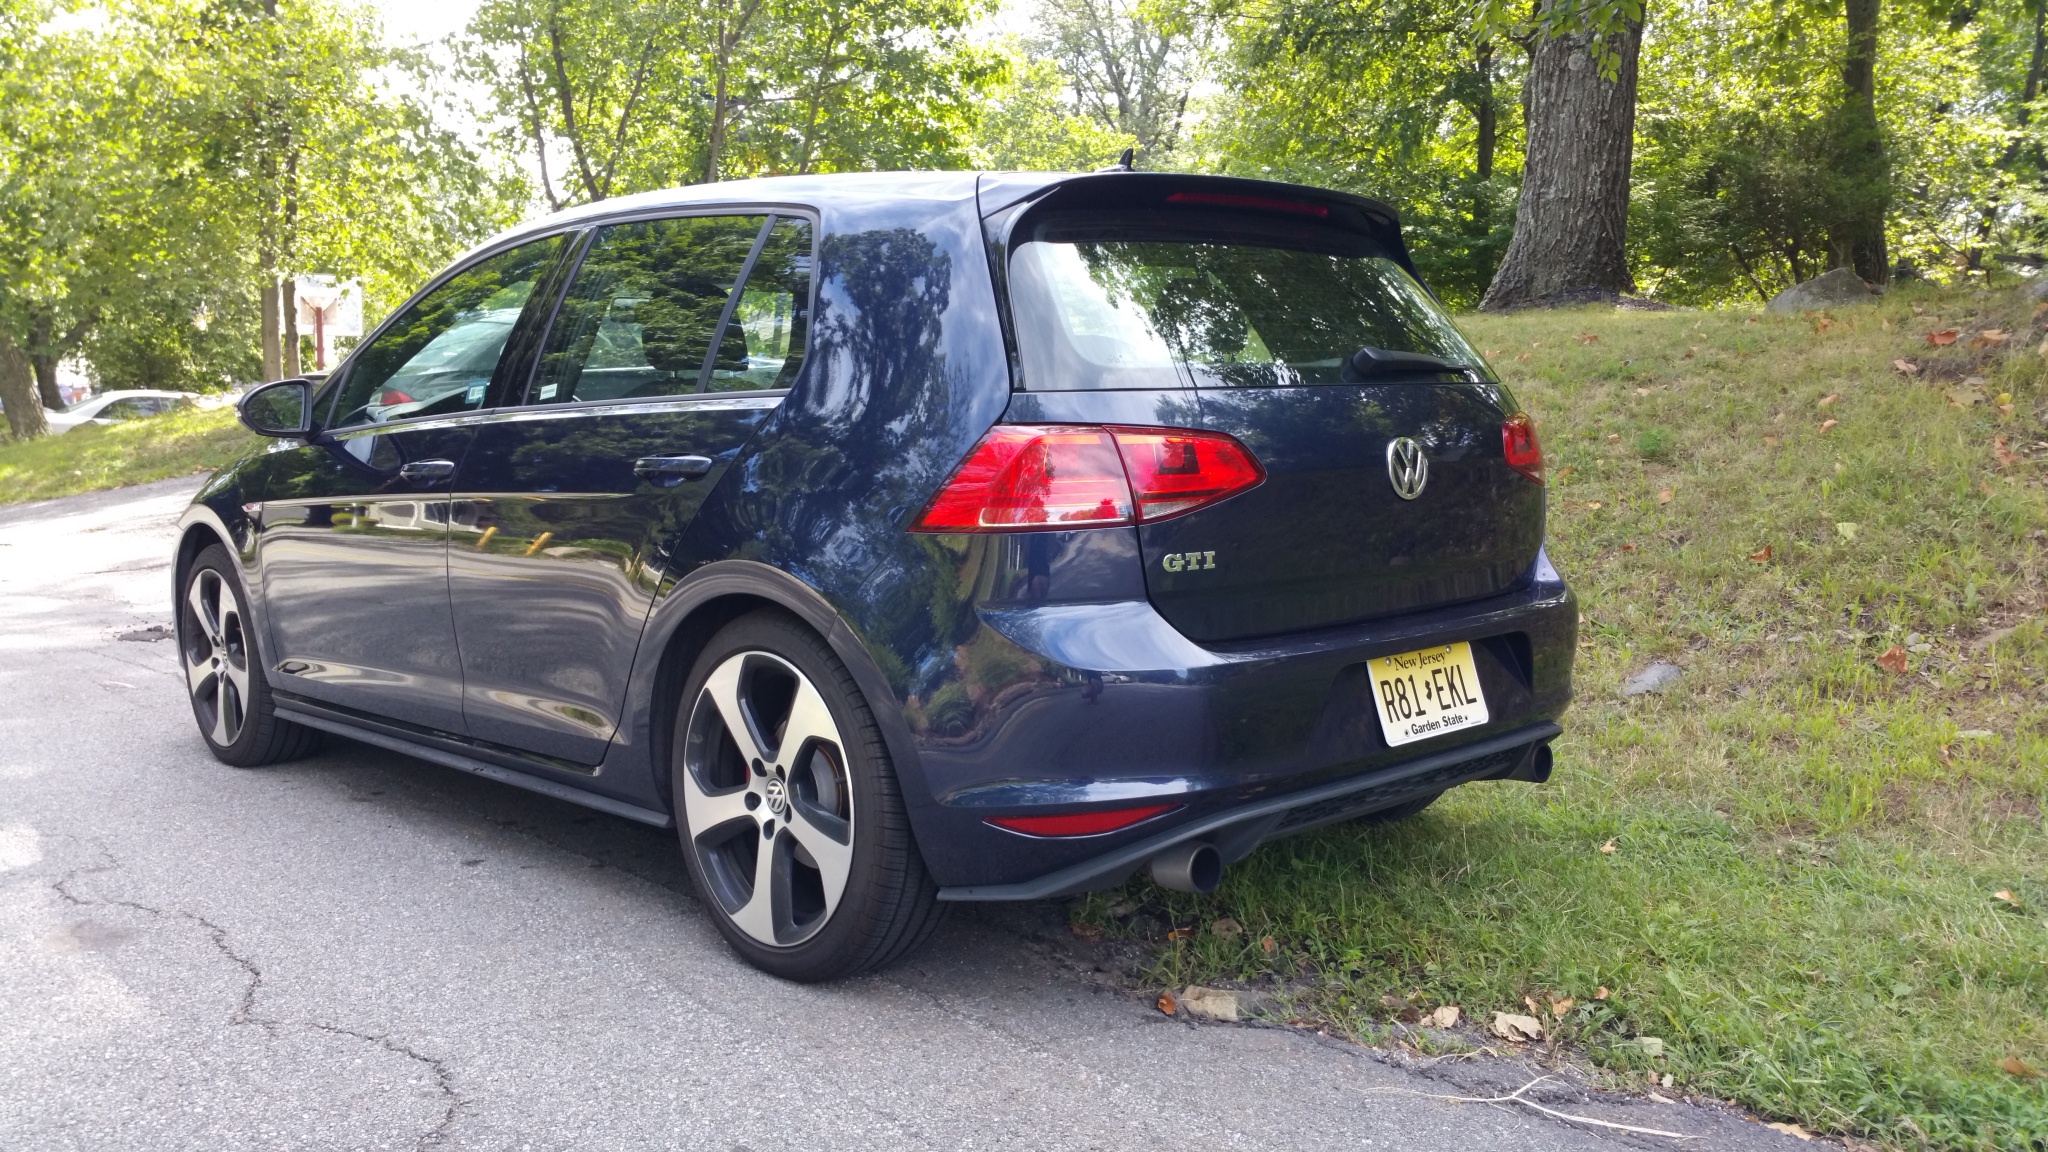 Full Review: VW GTI | Shifting Lanes